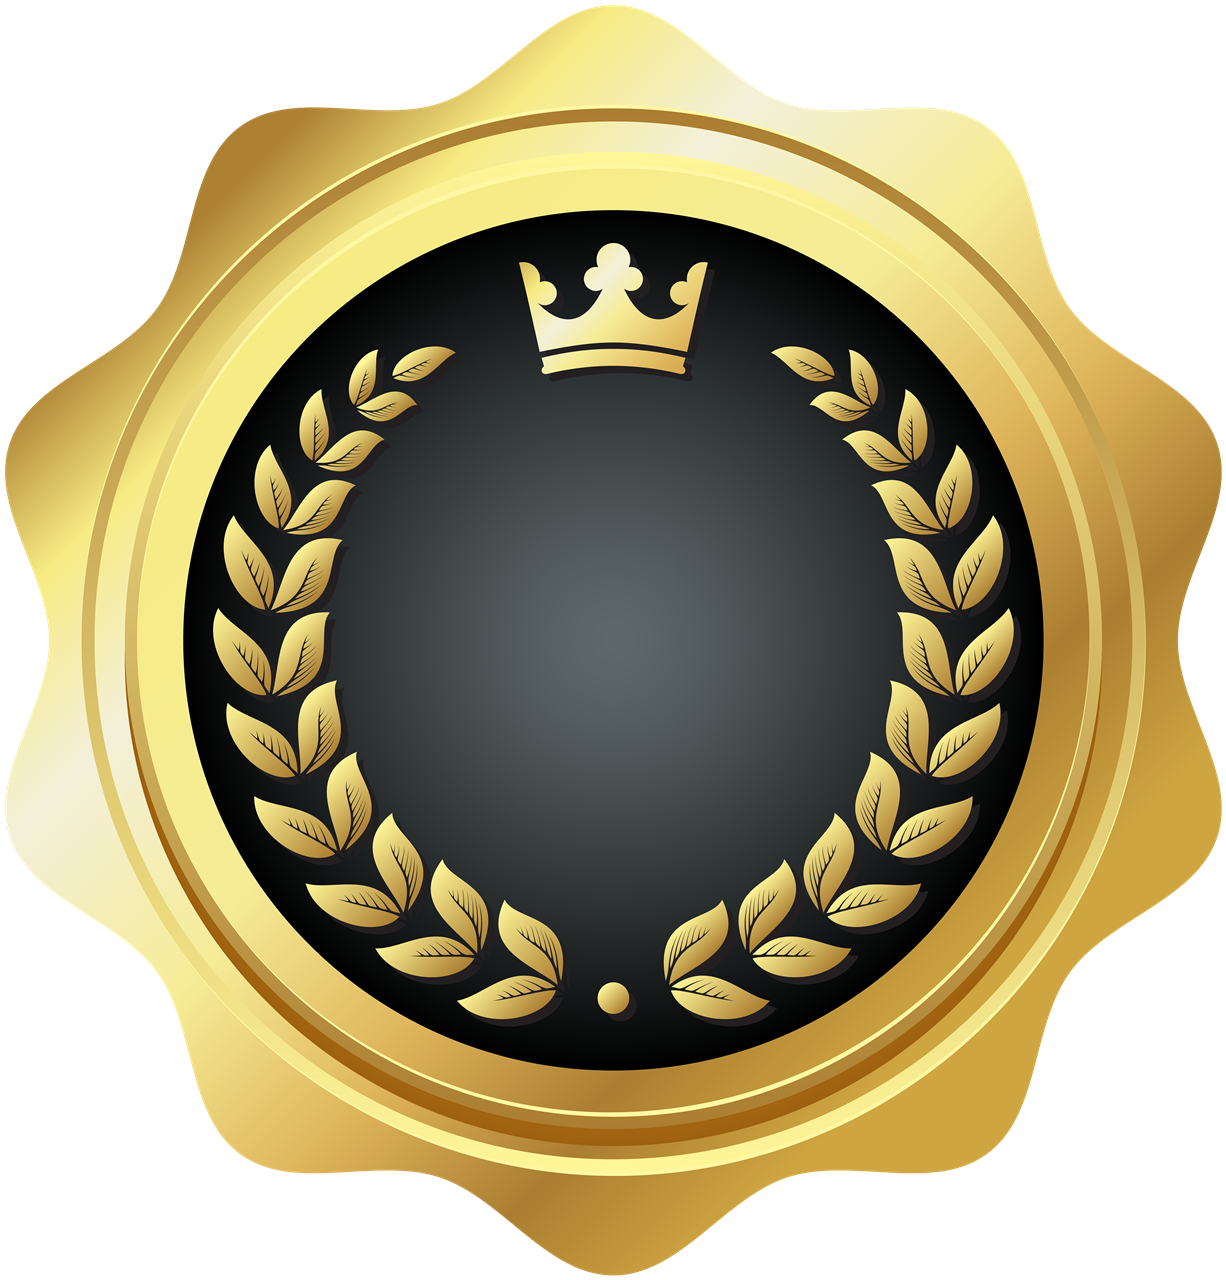 Golden-Badge-Free-PNG-Image